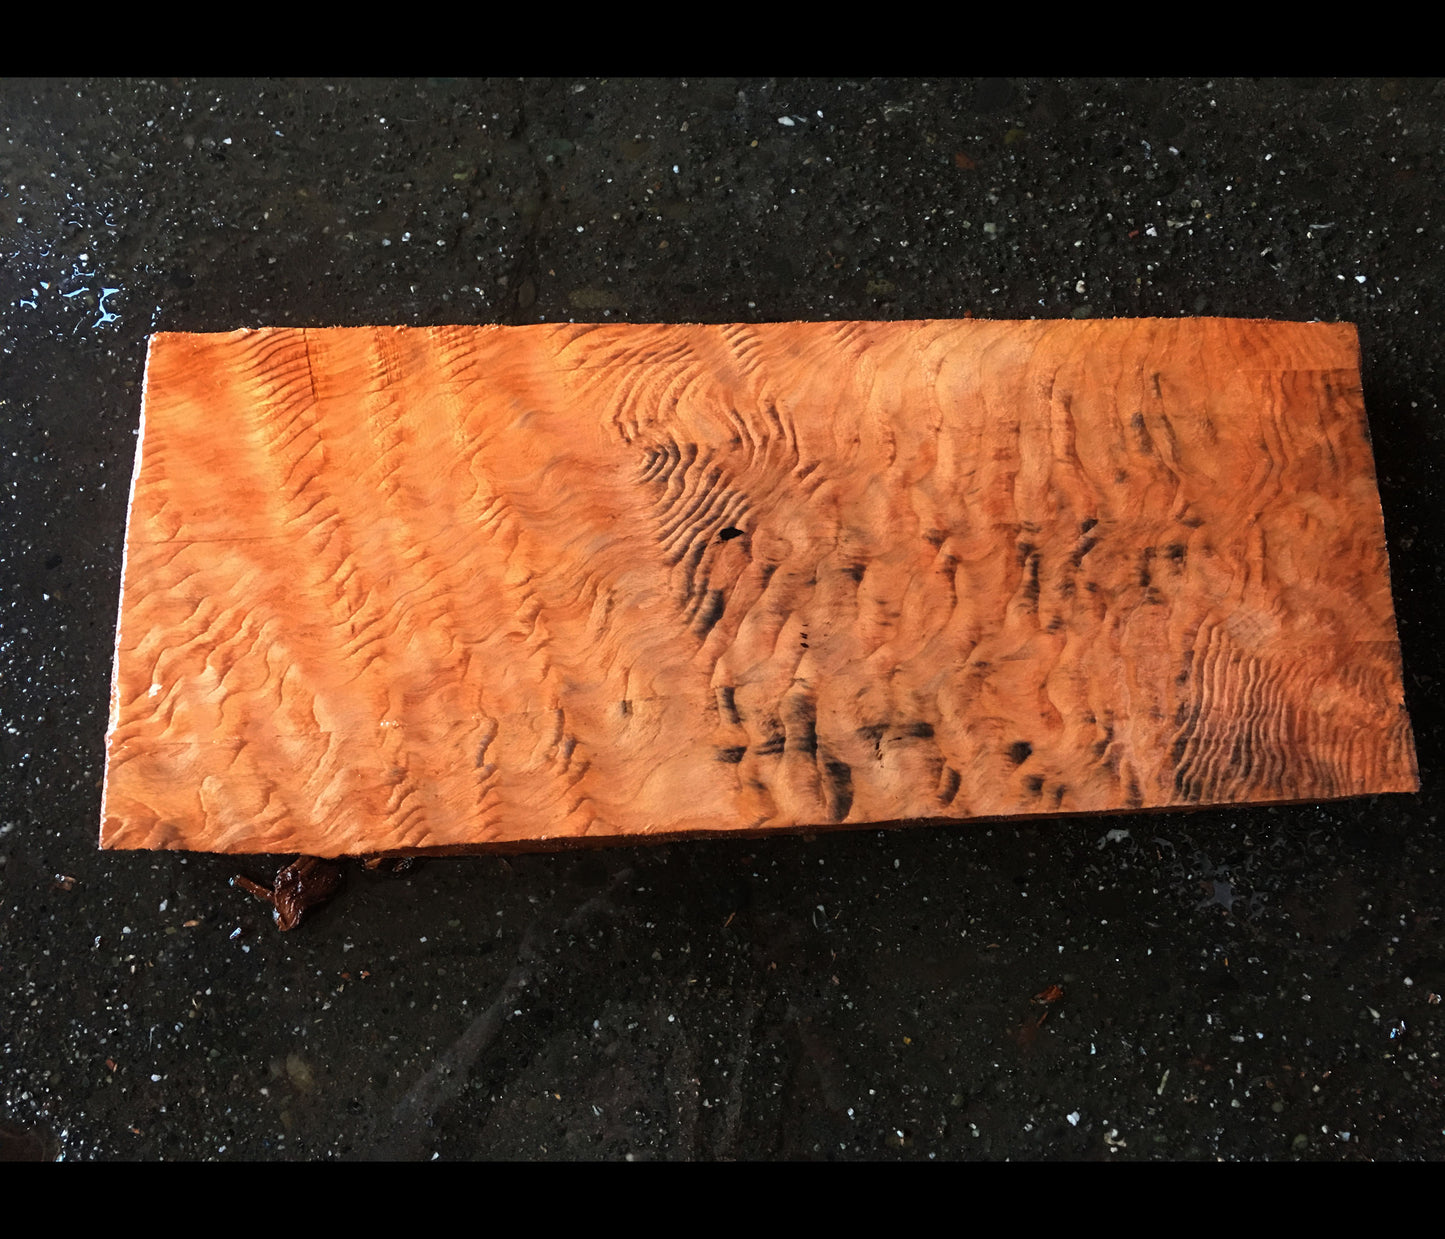 Book match guitar | ,instrament wood | DIY crafts | 22-625